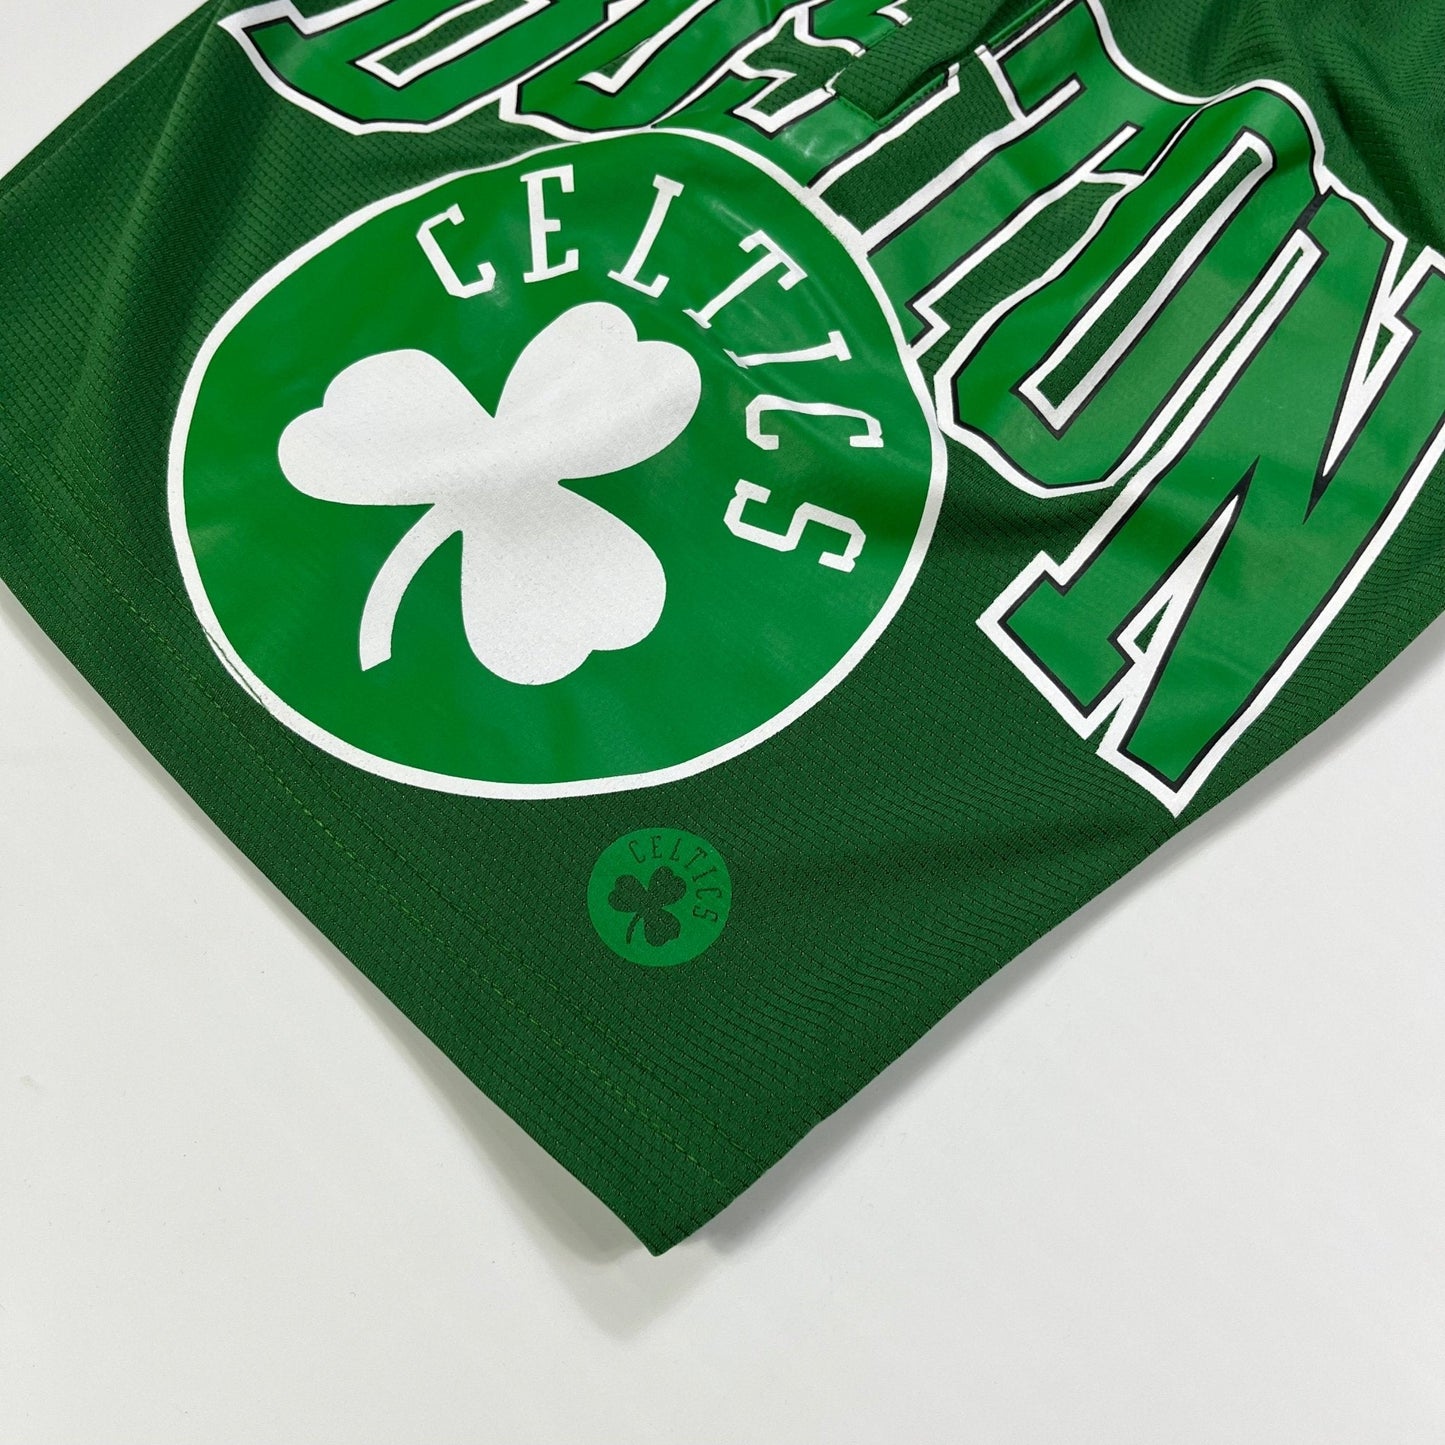 Shorts casual do Boston Celtics verde